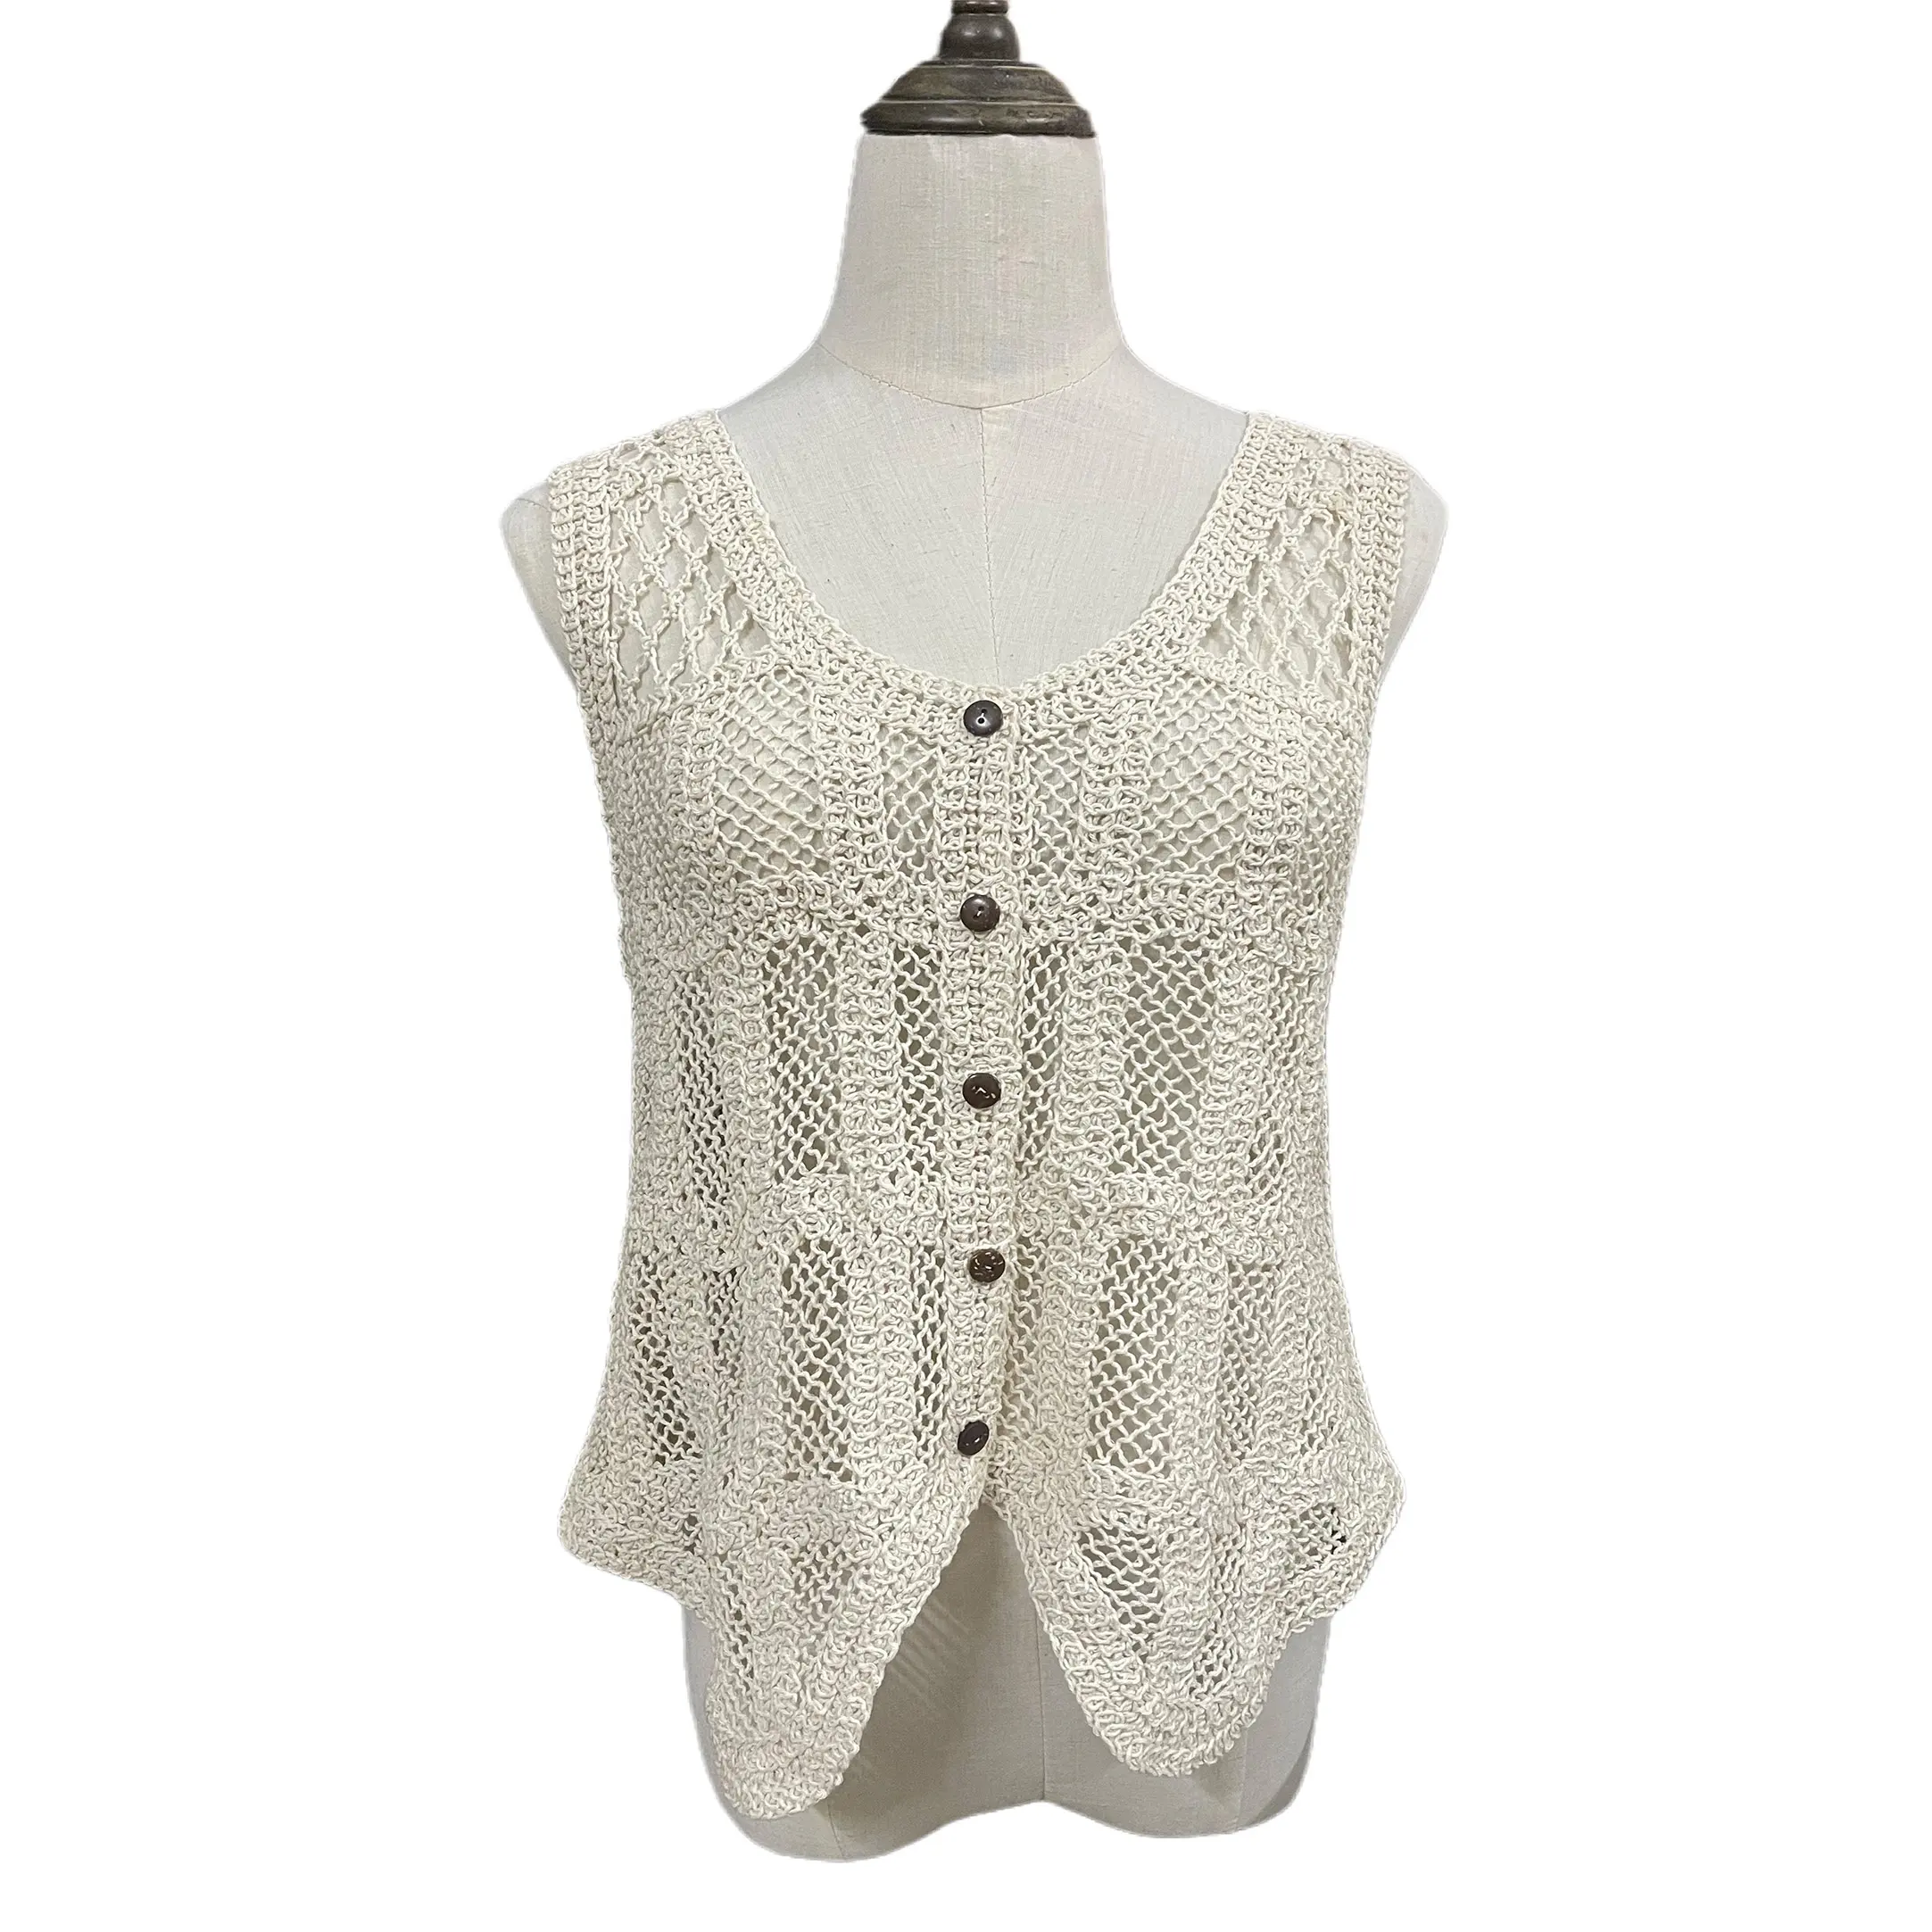 100%cotton Crochet Top Sleeveless Lace crochet knitting Hollow Out Fashion Crochet Blouse tank Tops for women